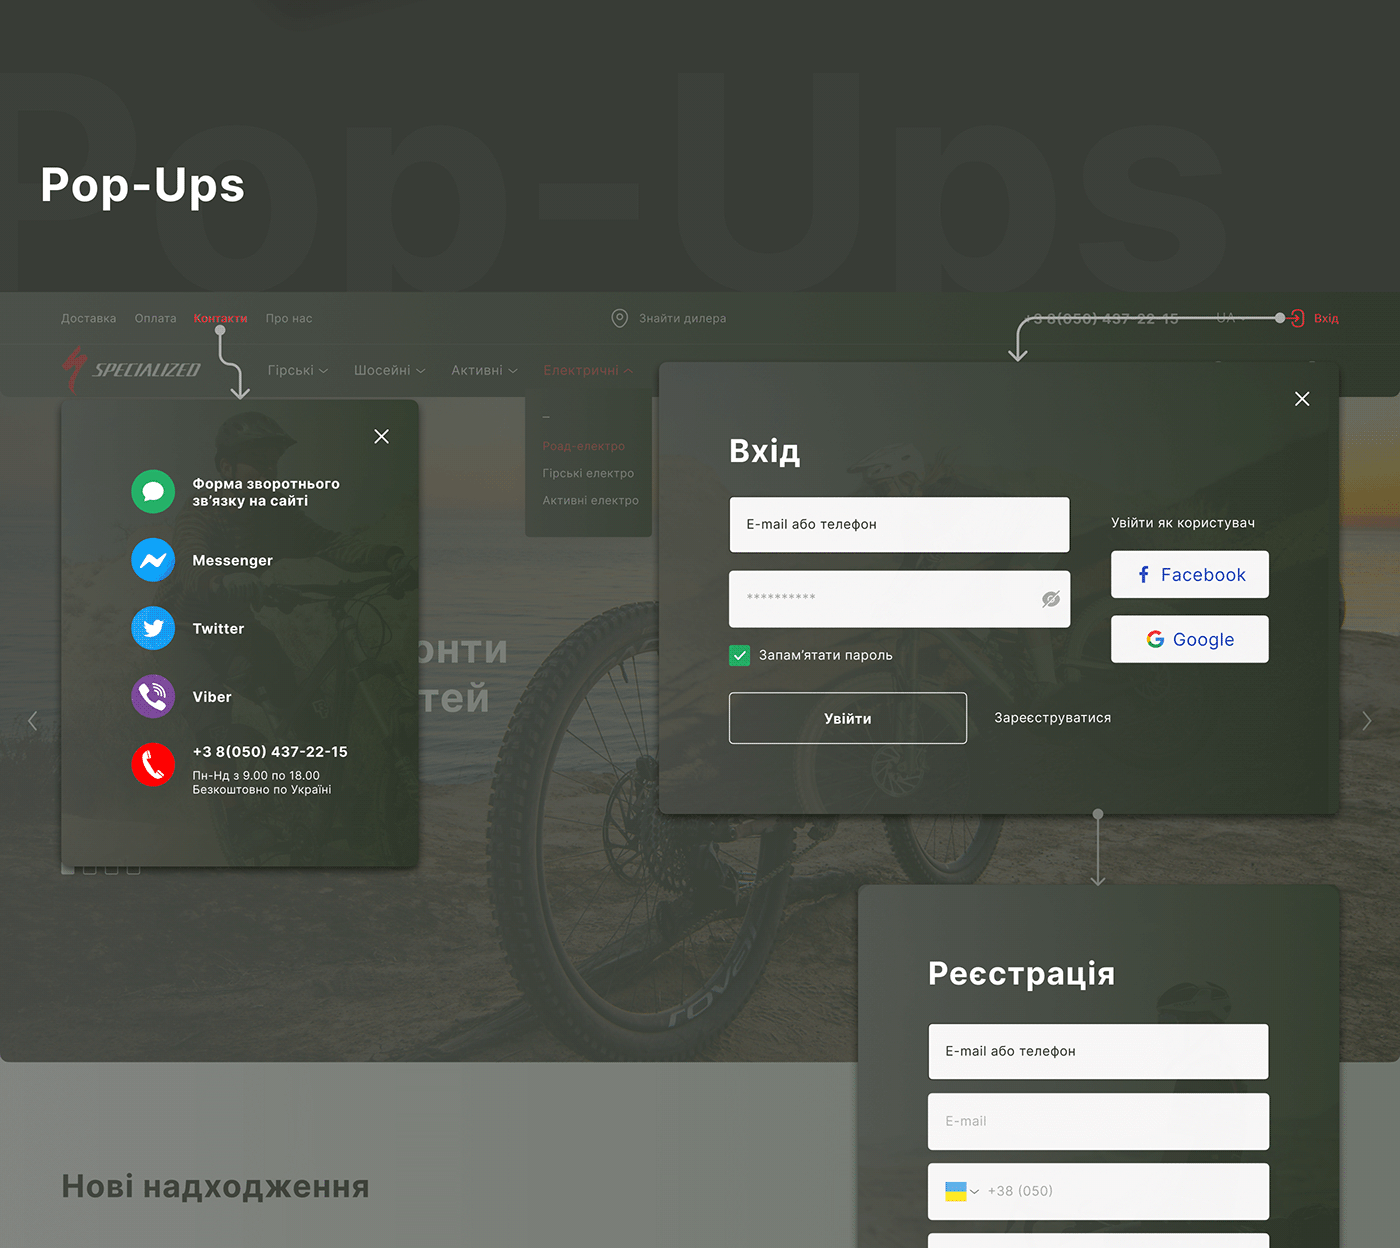 Bike bycicle e-commerce landing page specialized sport UI/UX Web Website